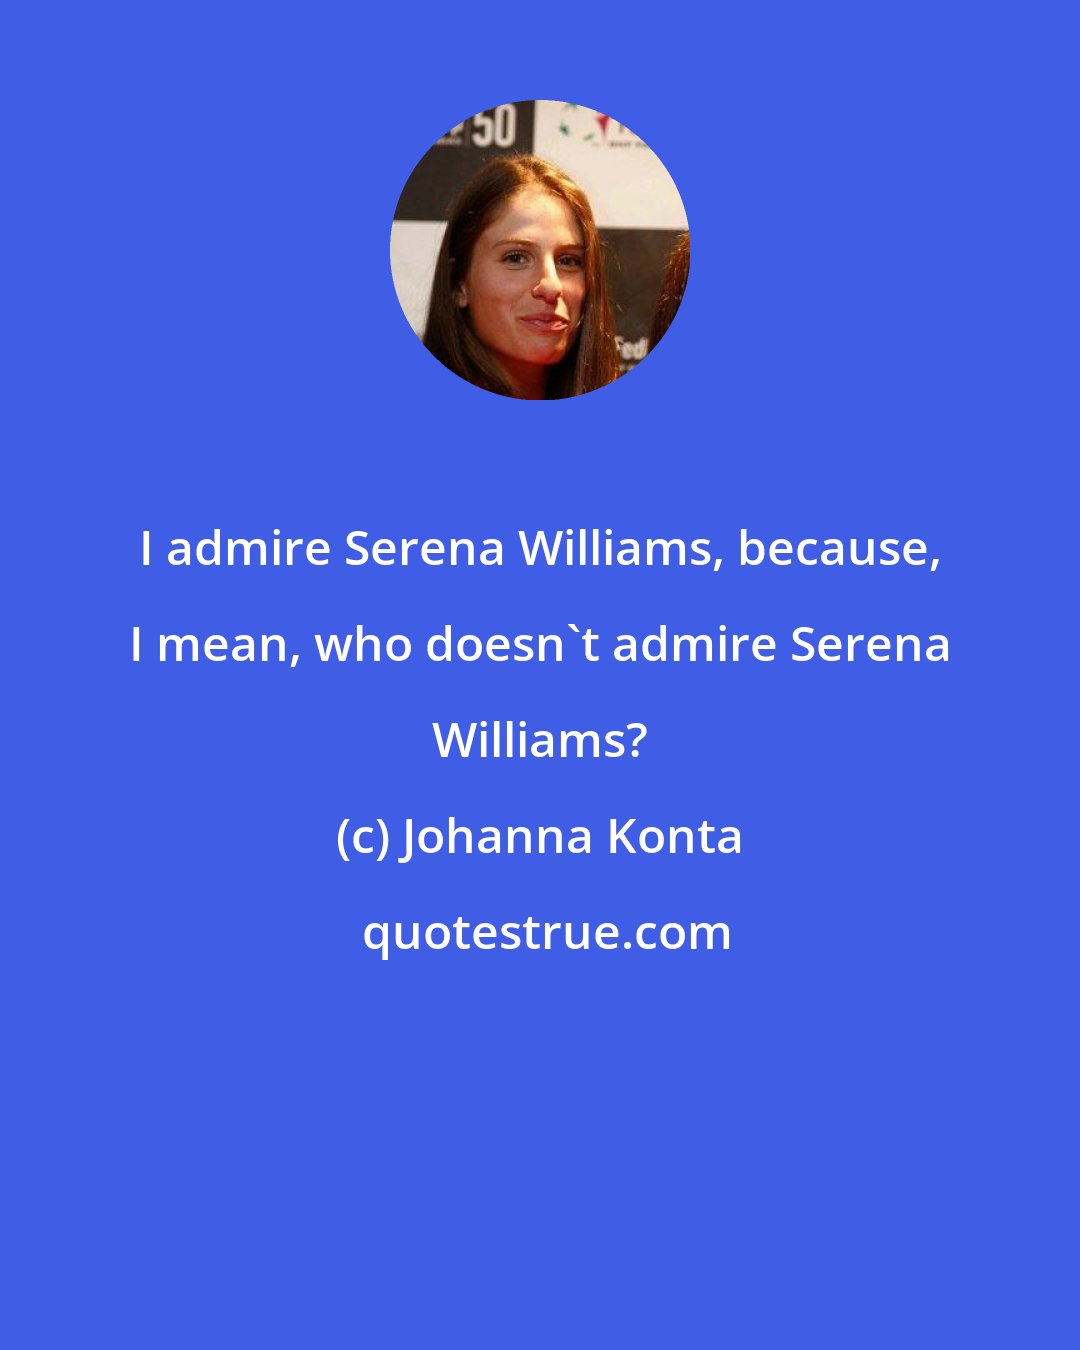 Johanna Konta: I admire Serena Williams, because, I mean, who doesn't admire Serena Williams?